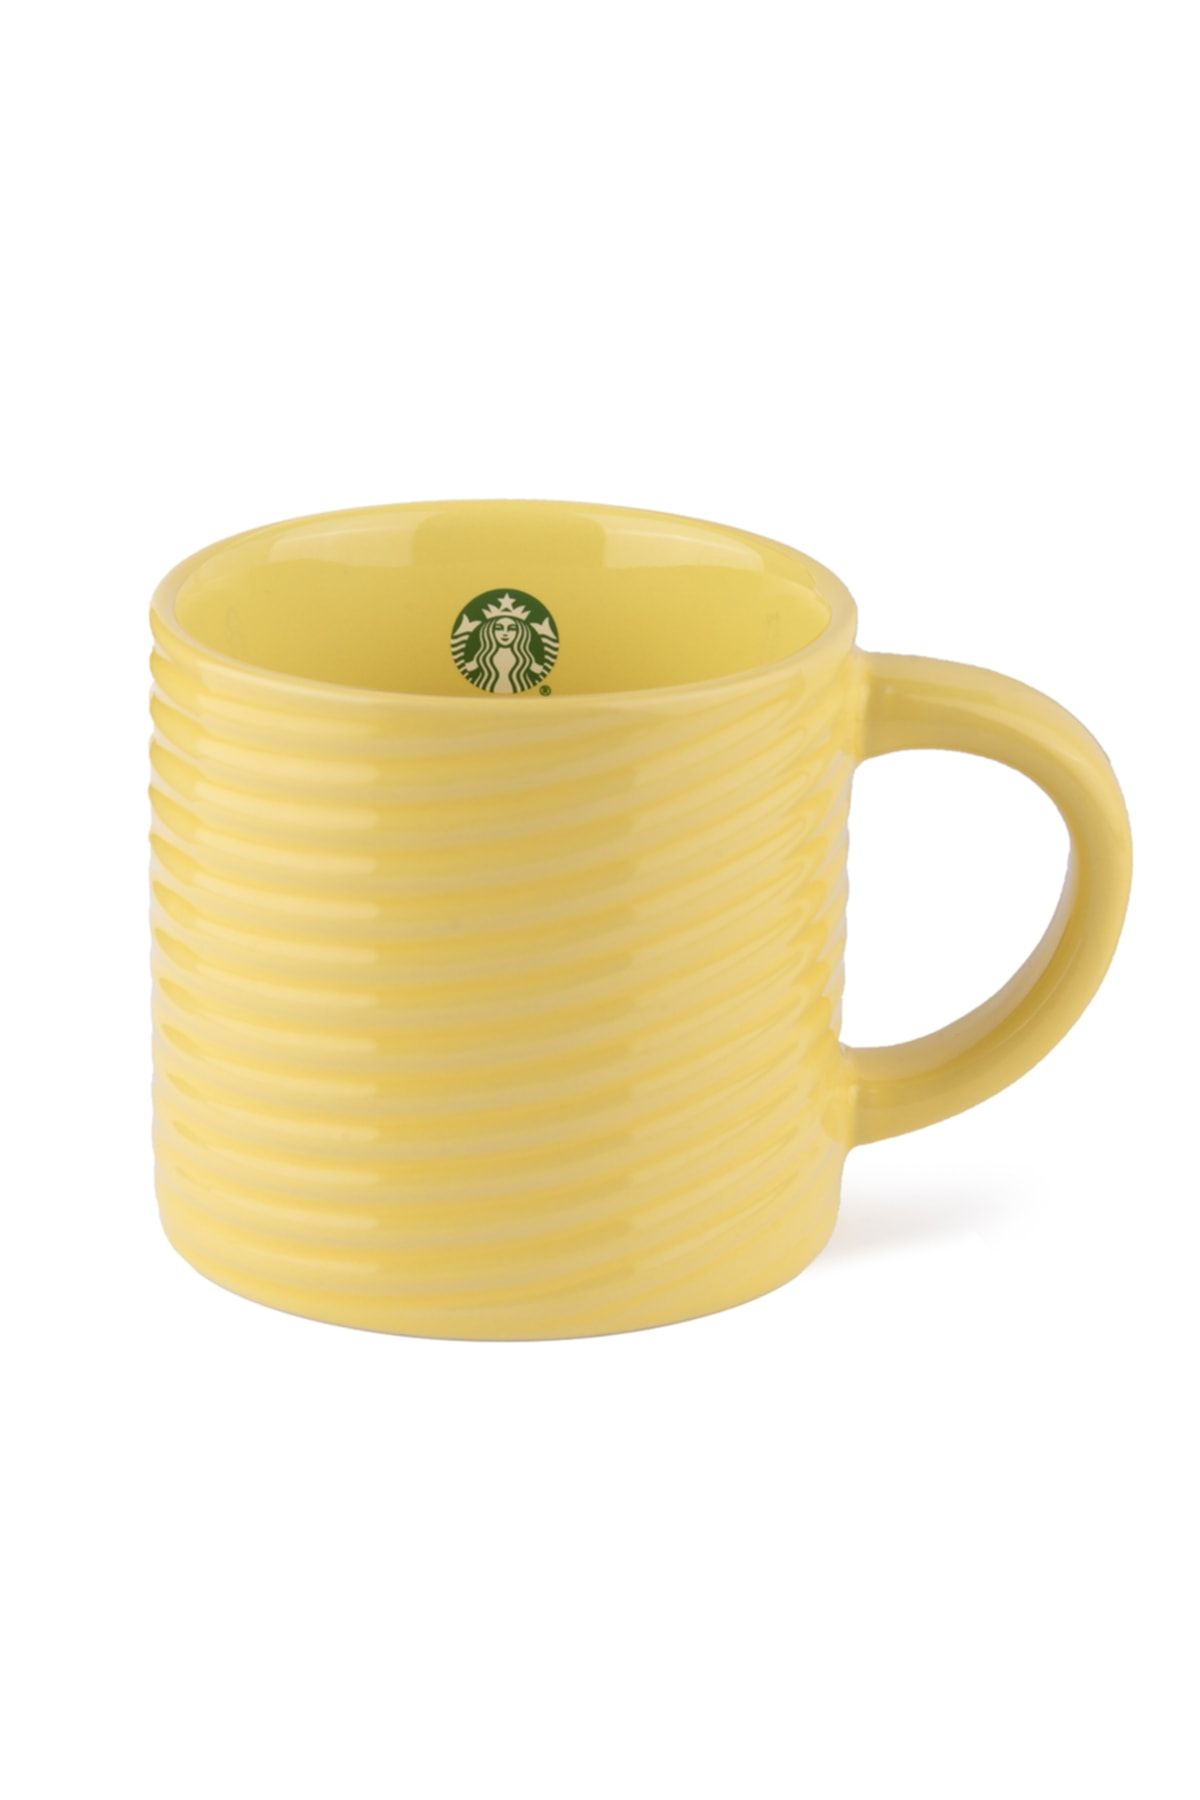 Starbucks Sarı Renkli Kupa 284 Ml